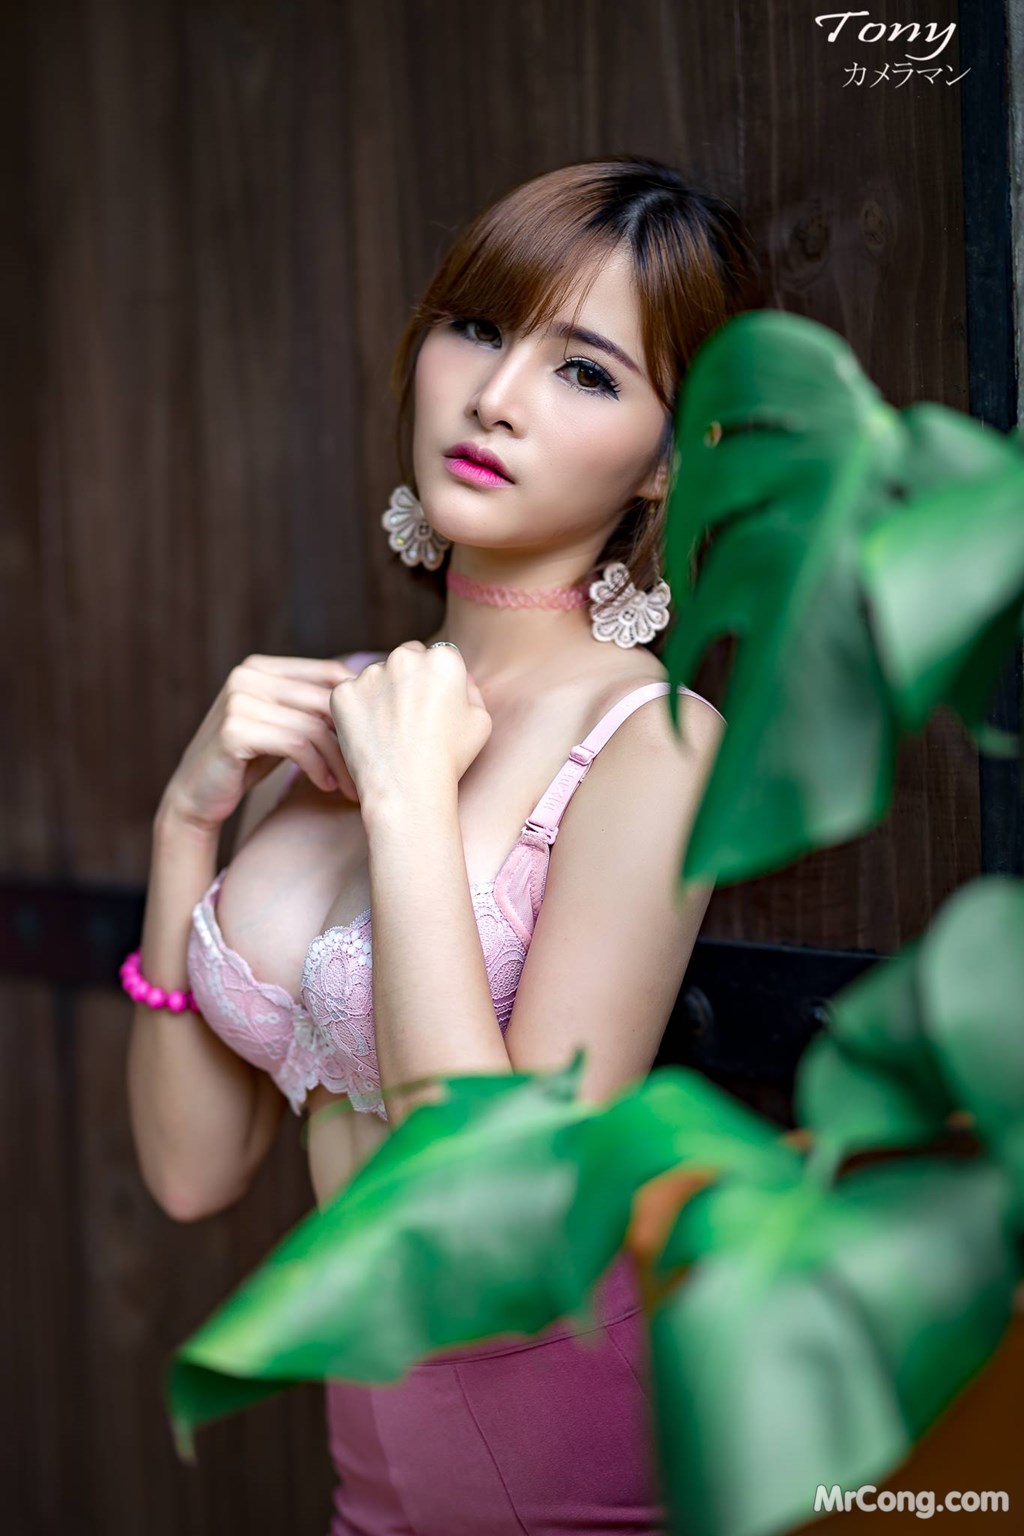 Thai Model No.344: Model May Wly (46 photos)